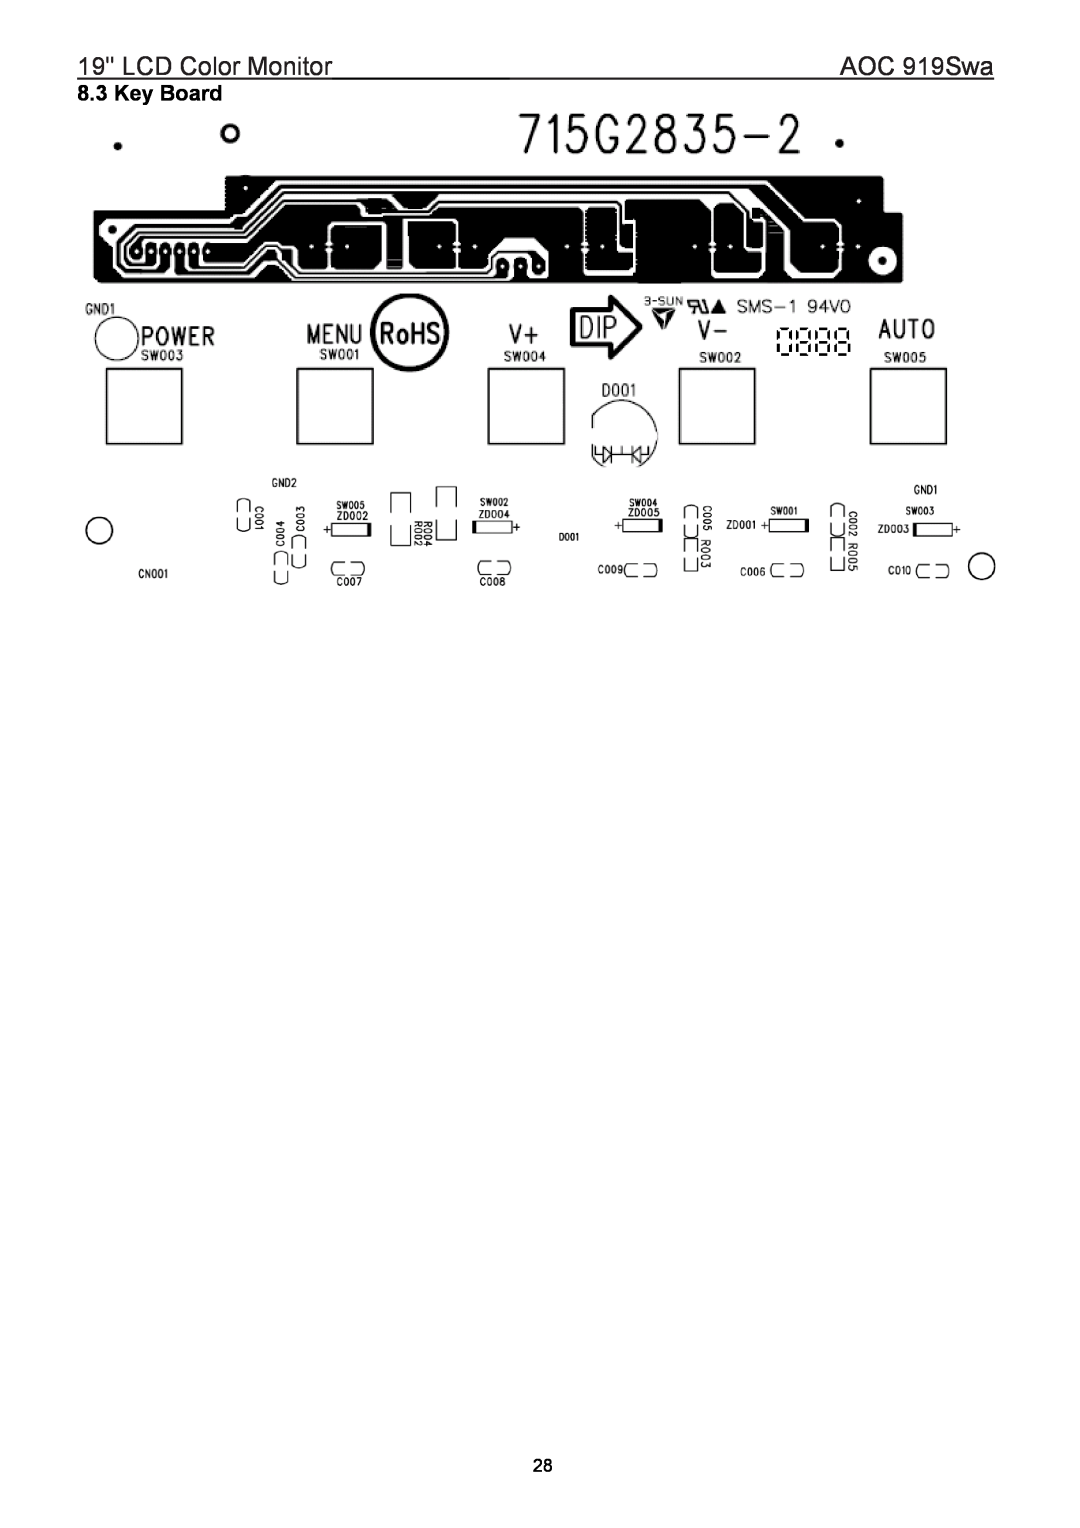 AOC 919SWA manual Key Board, LCD Color Monitor, AOC 919Swa 